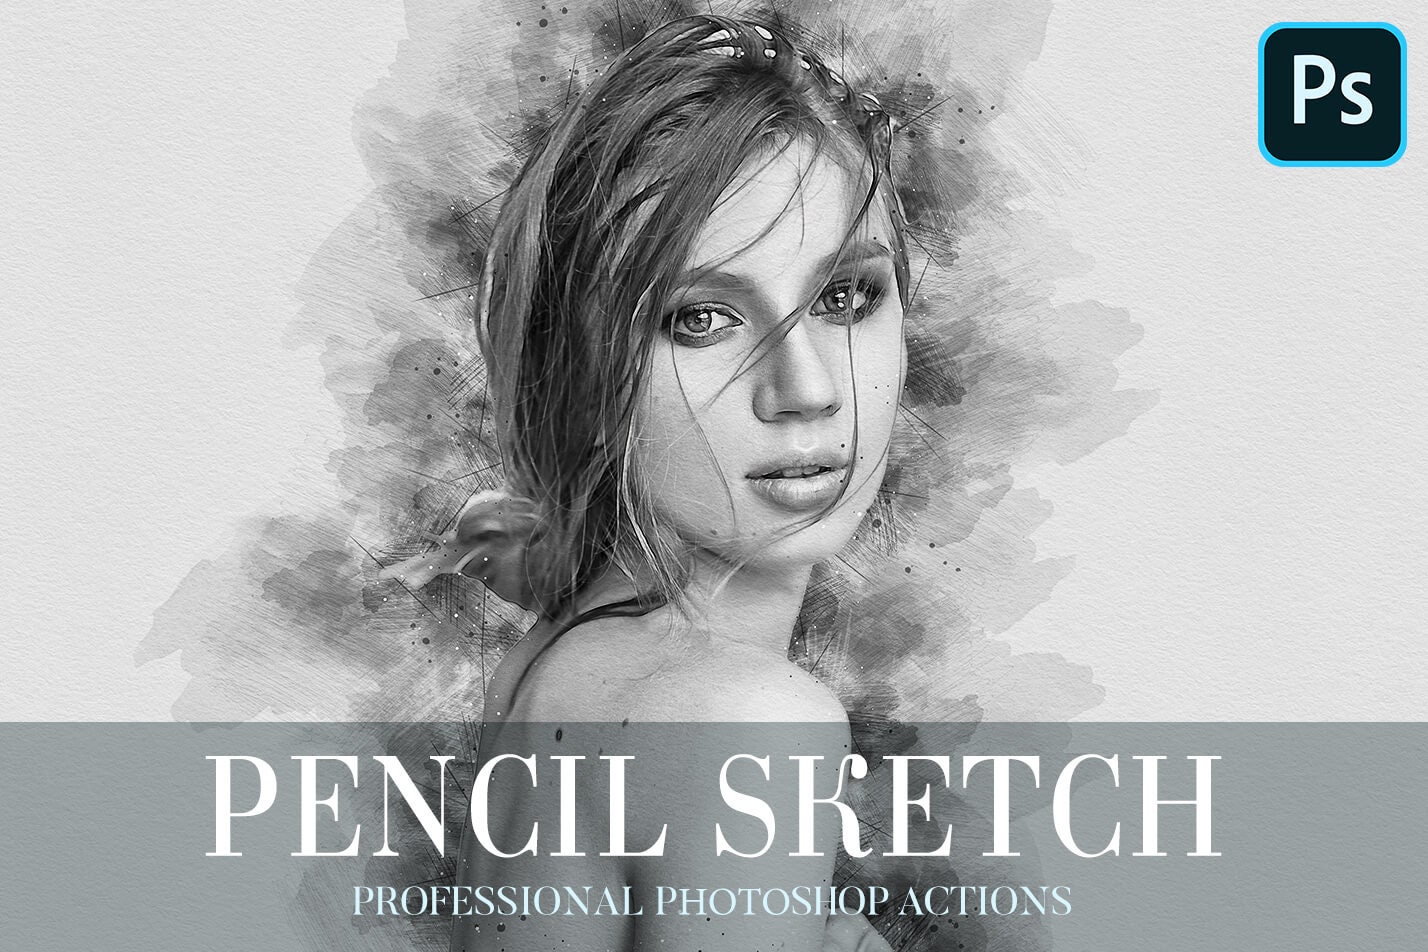 Digital Sketch Photoshop Action | Free download